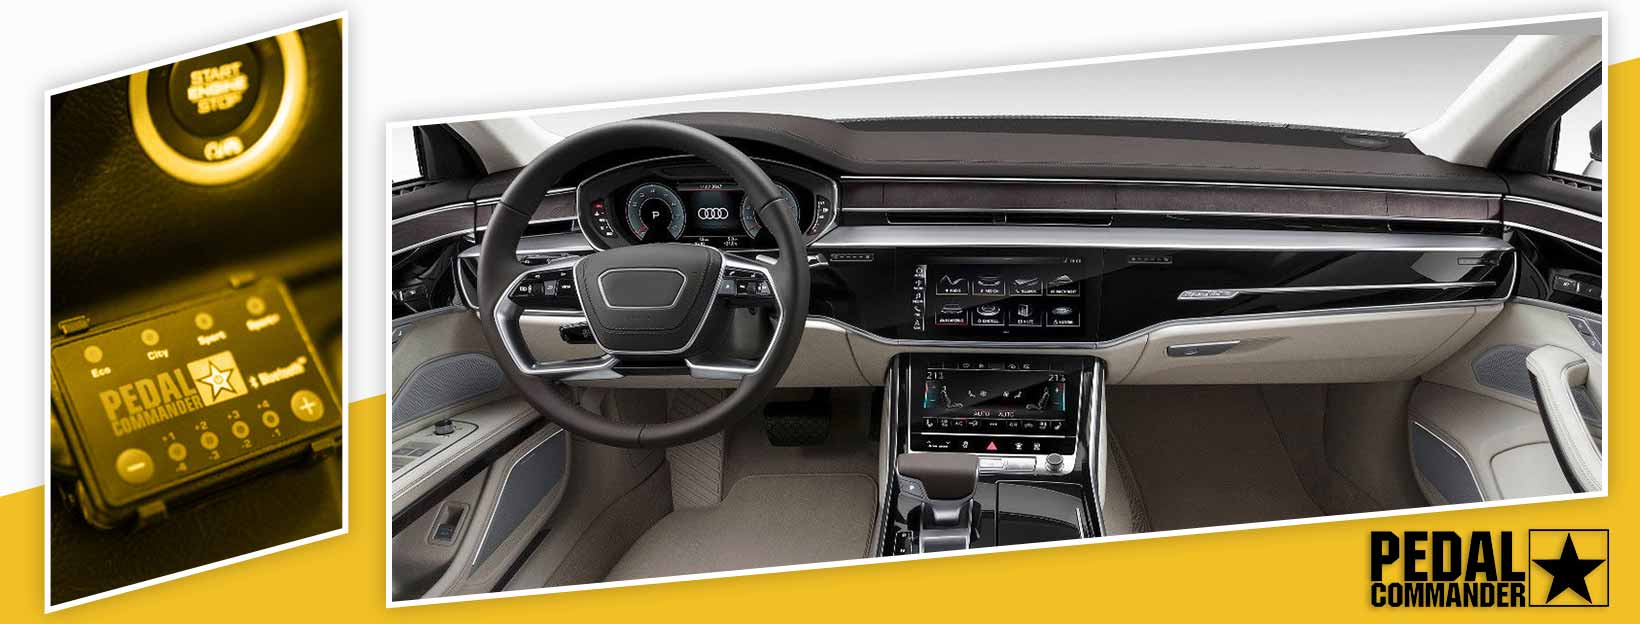 Pedal Commander for Audi S8 - interior